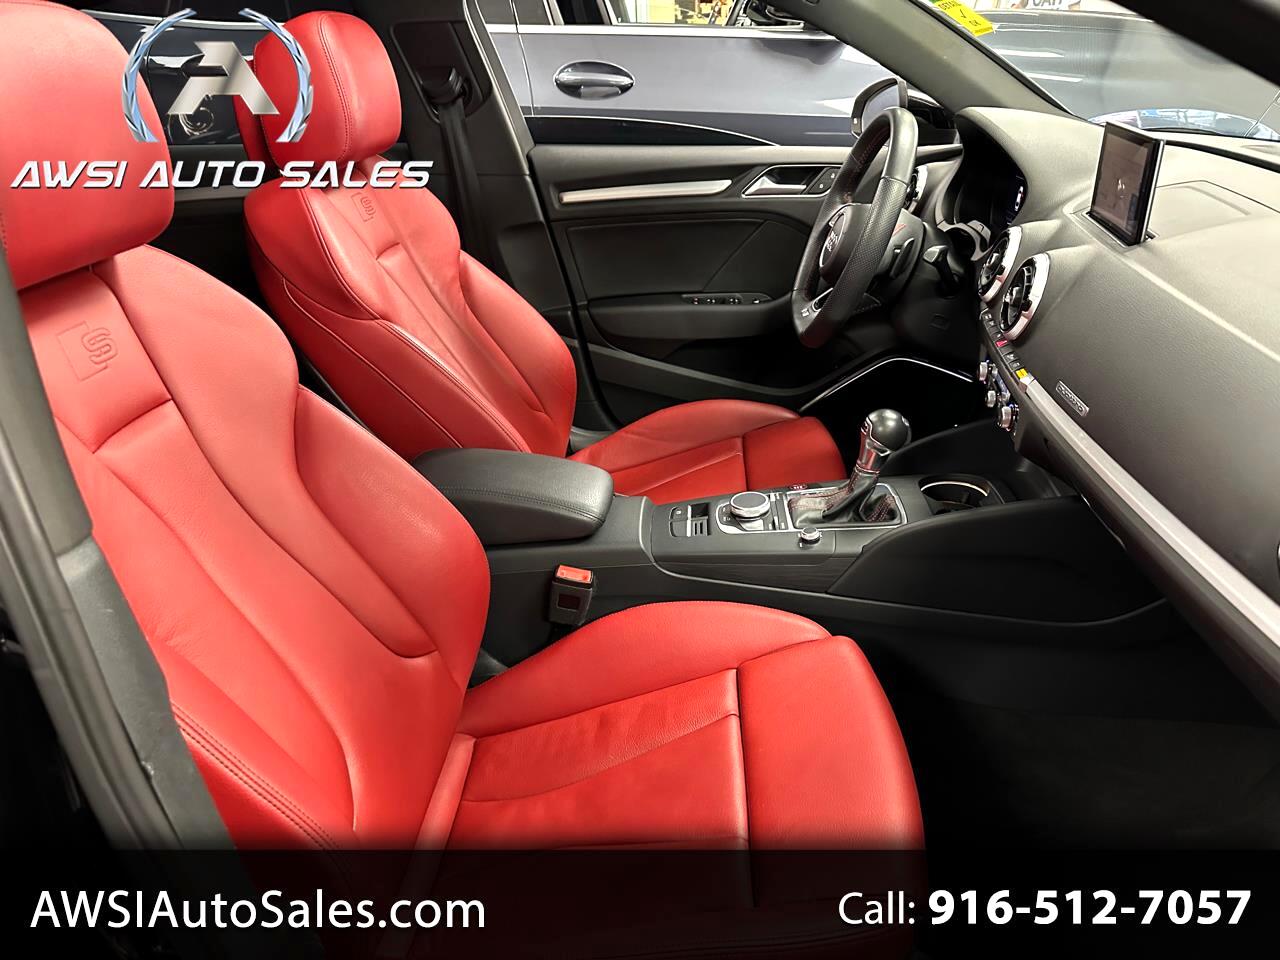 Used Cars for Sale Sacramento CA 95821 AWSI Auto Sales